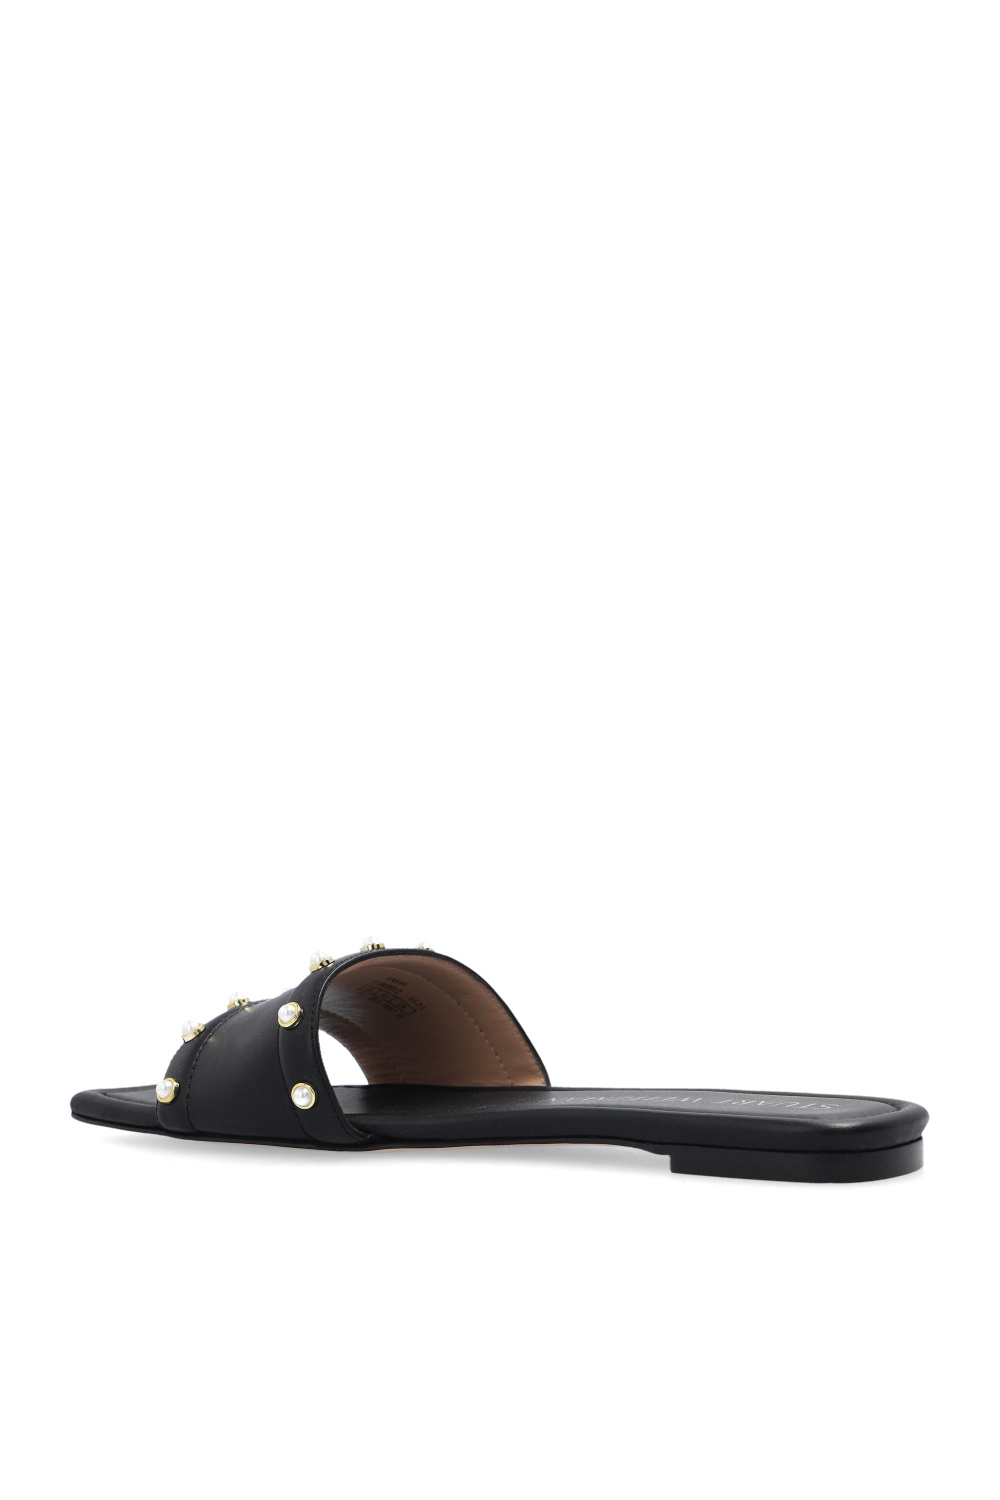 Luxury Rubber Summer Leather Slides Beach Sandals Shoes Designer Flat  Flip-Flops Slipper - China Design Walking Shoes and L V Sneaker for Men  Women price